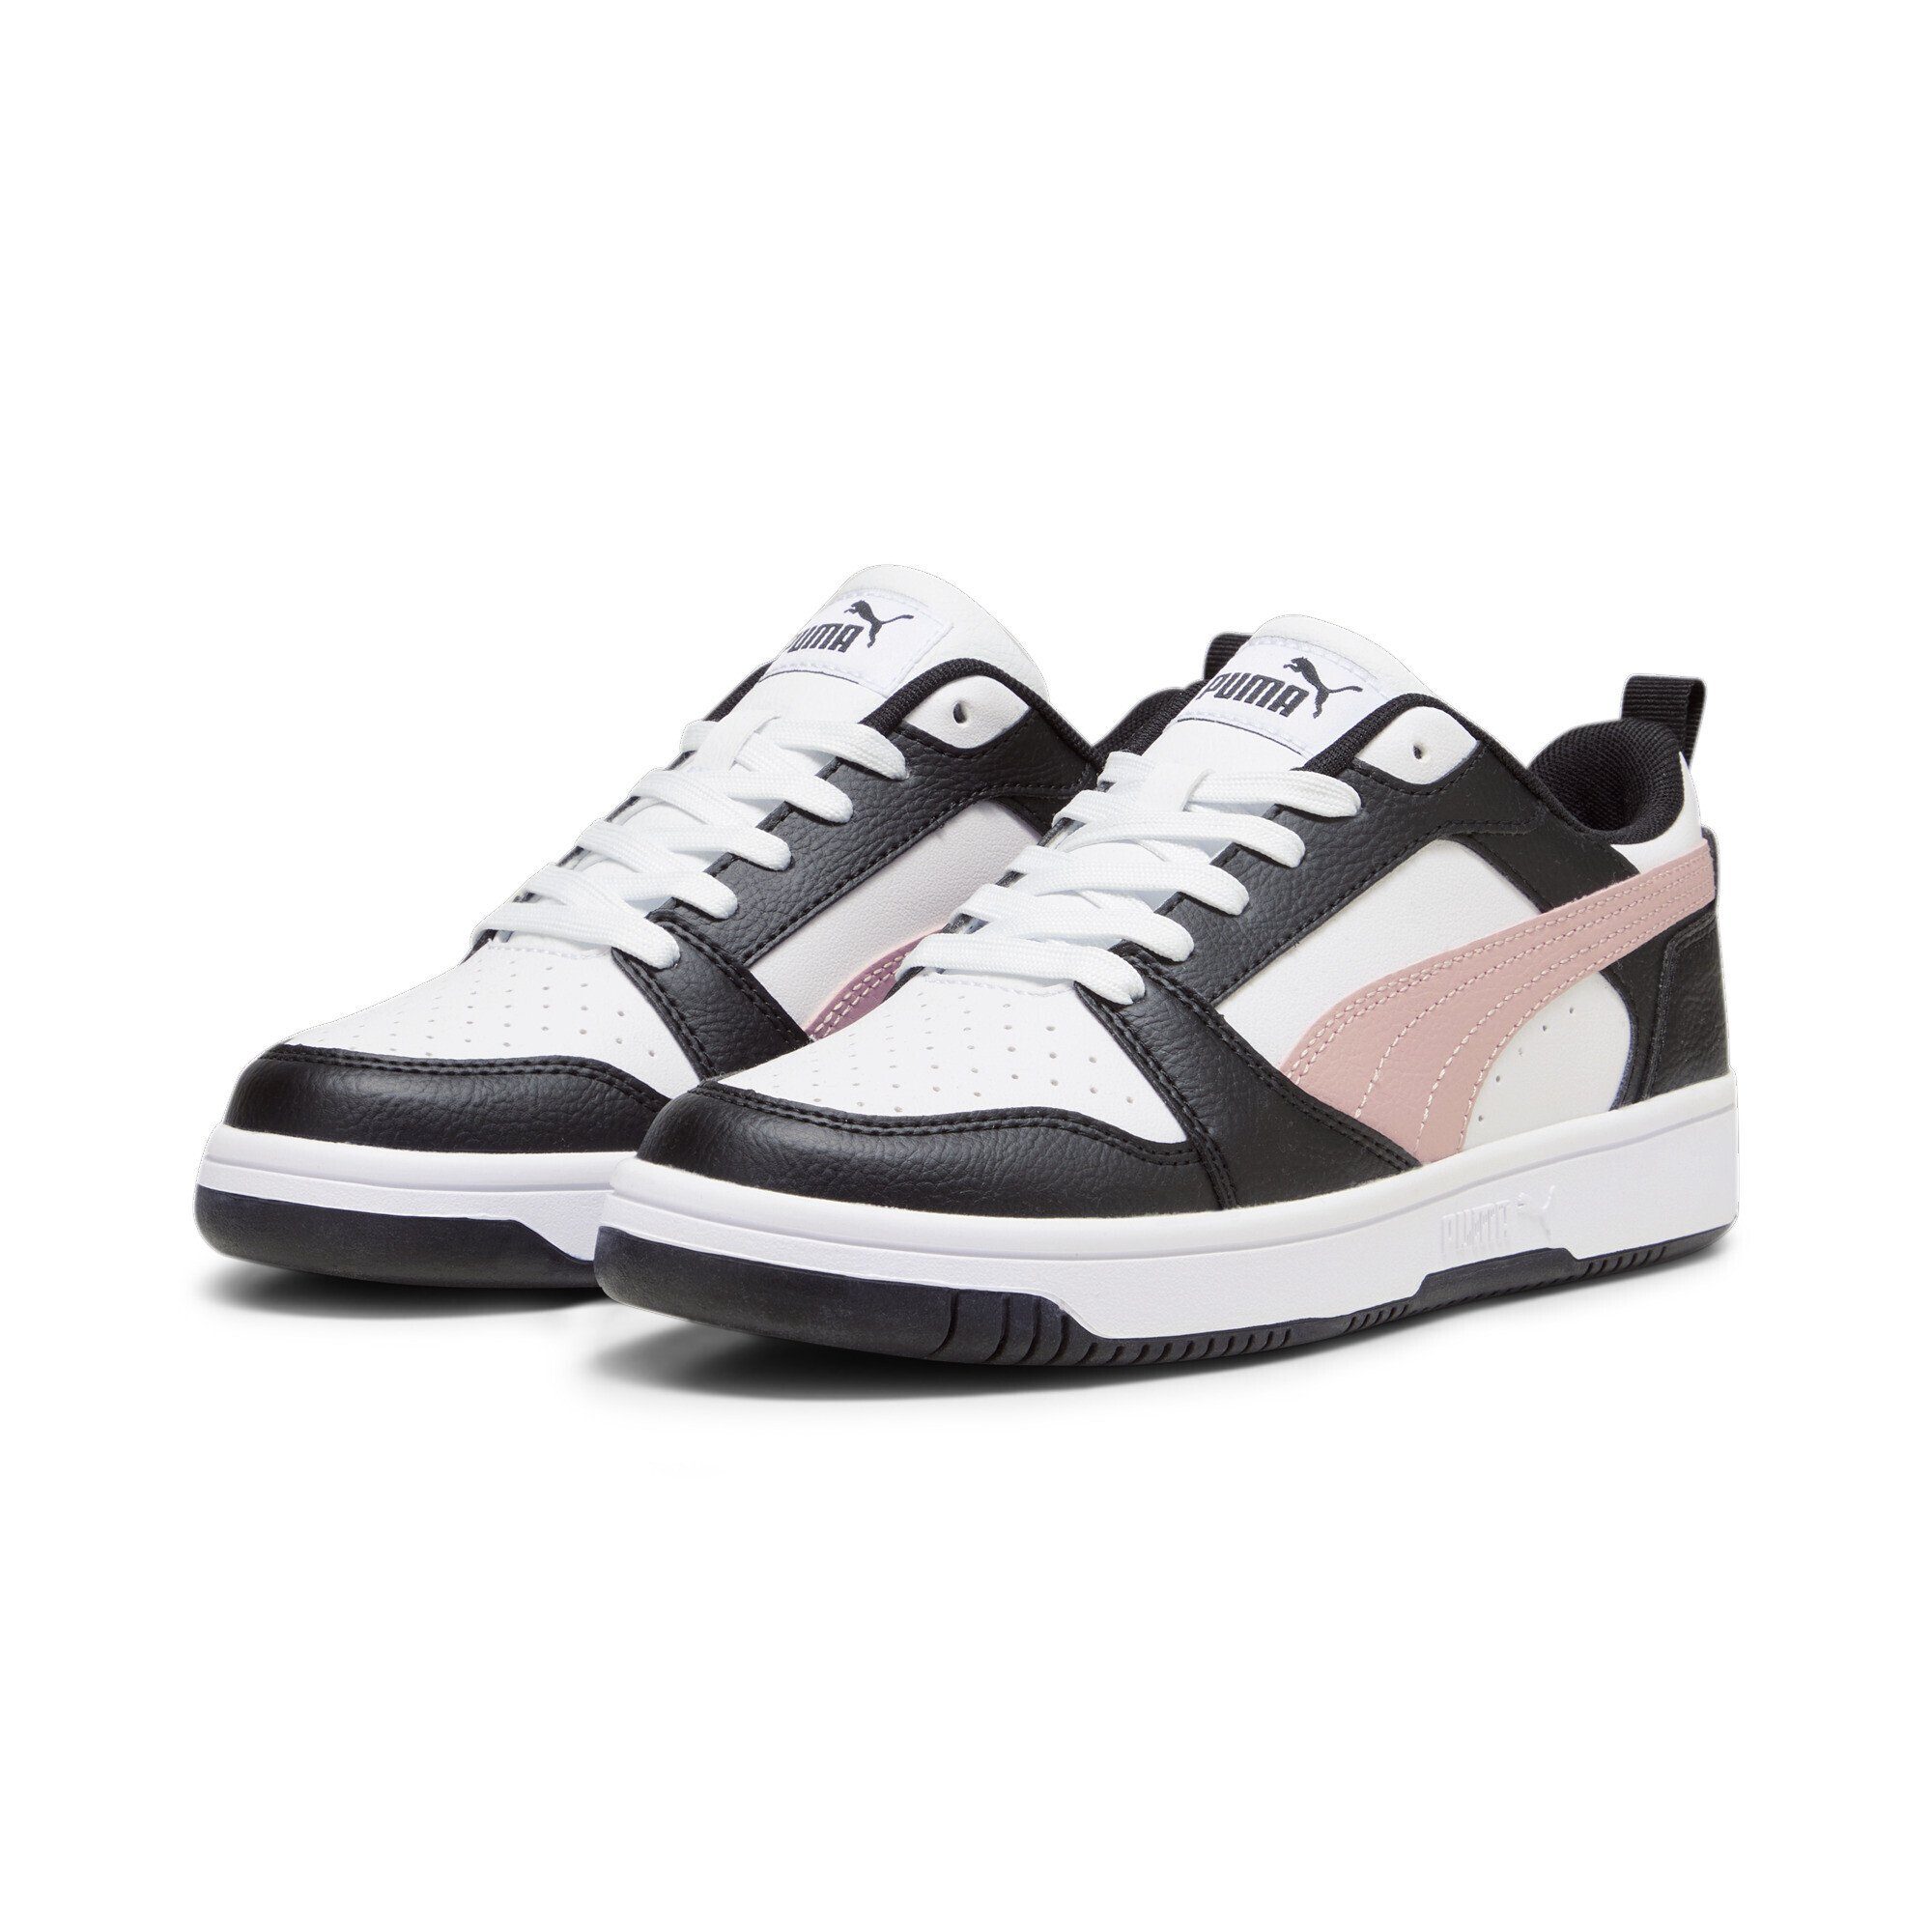 PUMA Rebound V6 Low Sneakers Erwachsene Sneaker White Future Pink Black